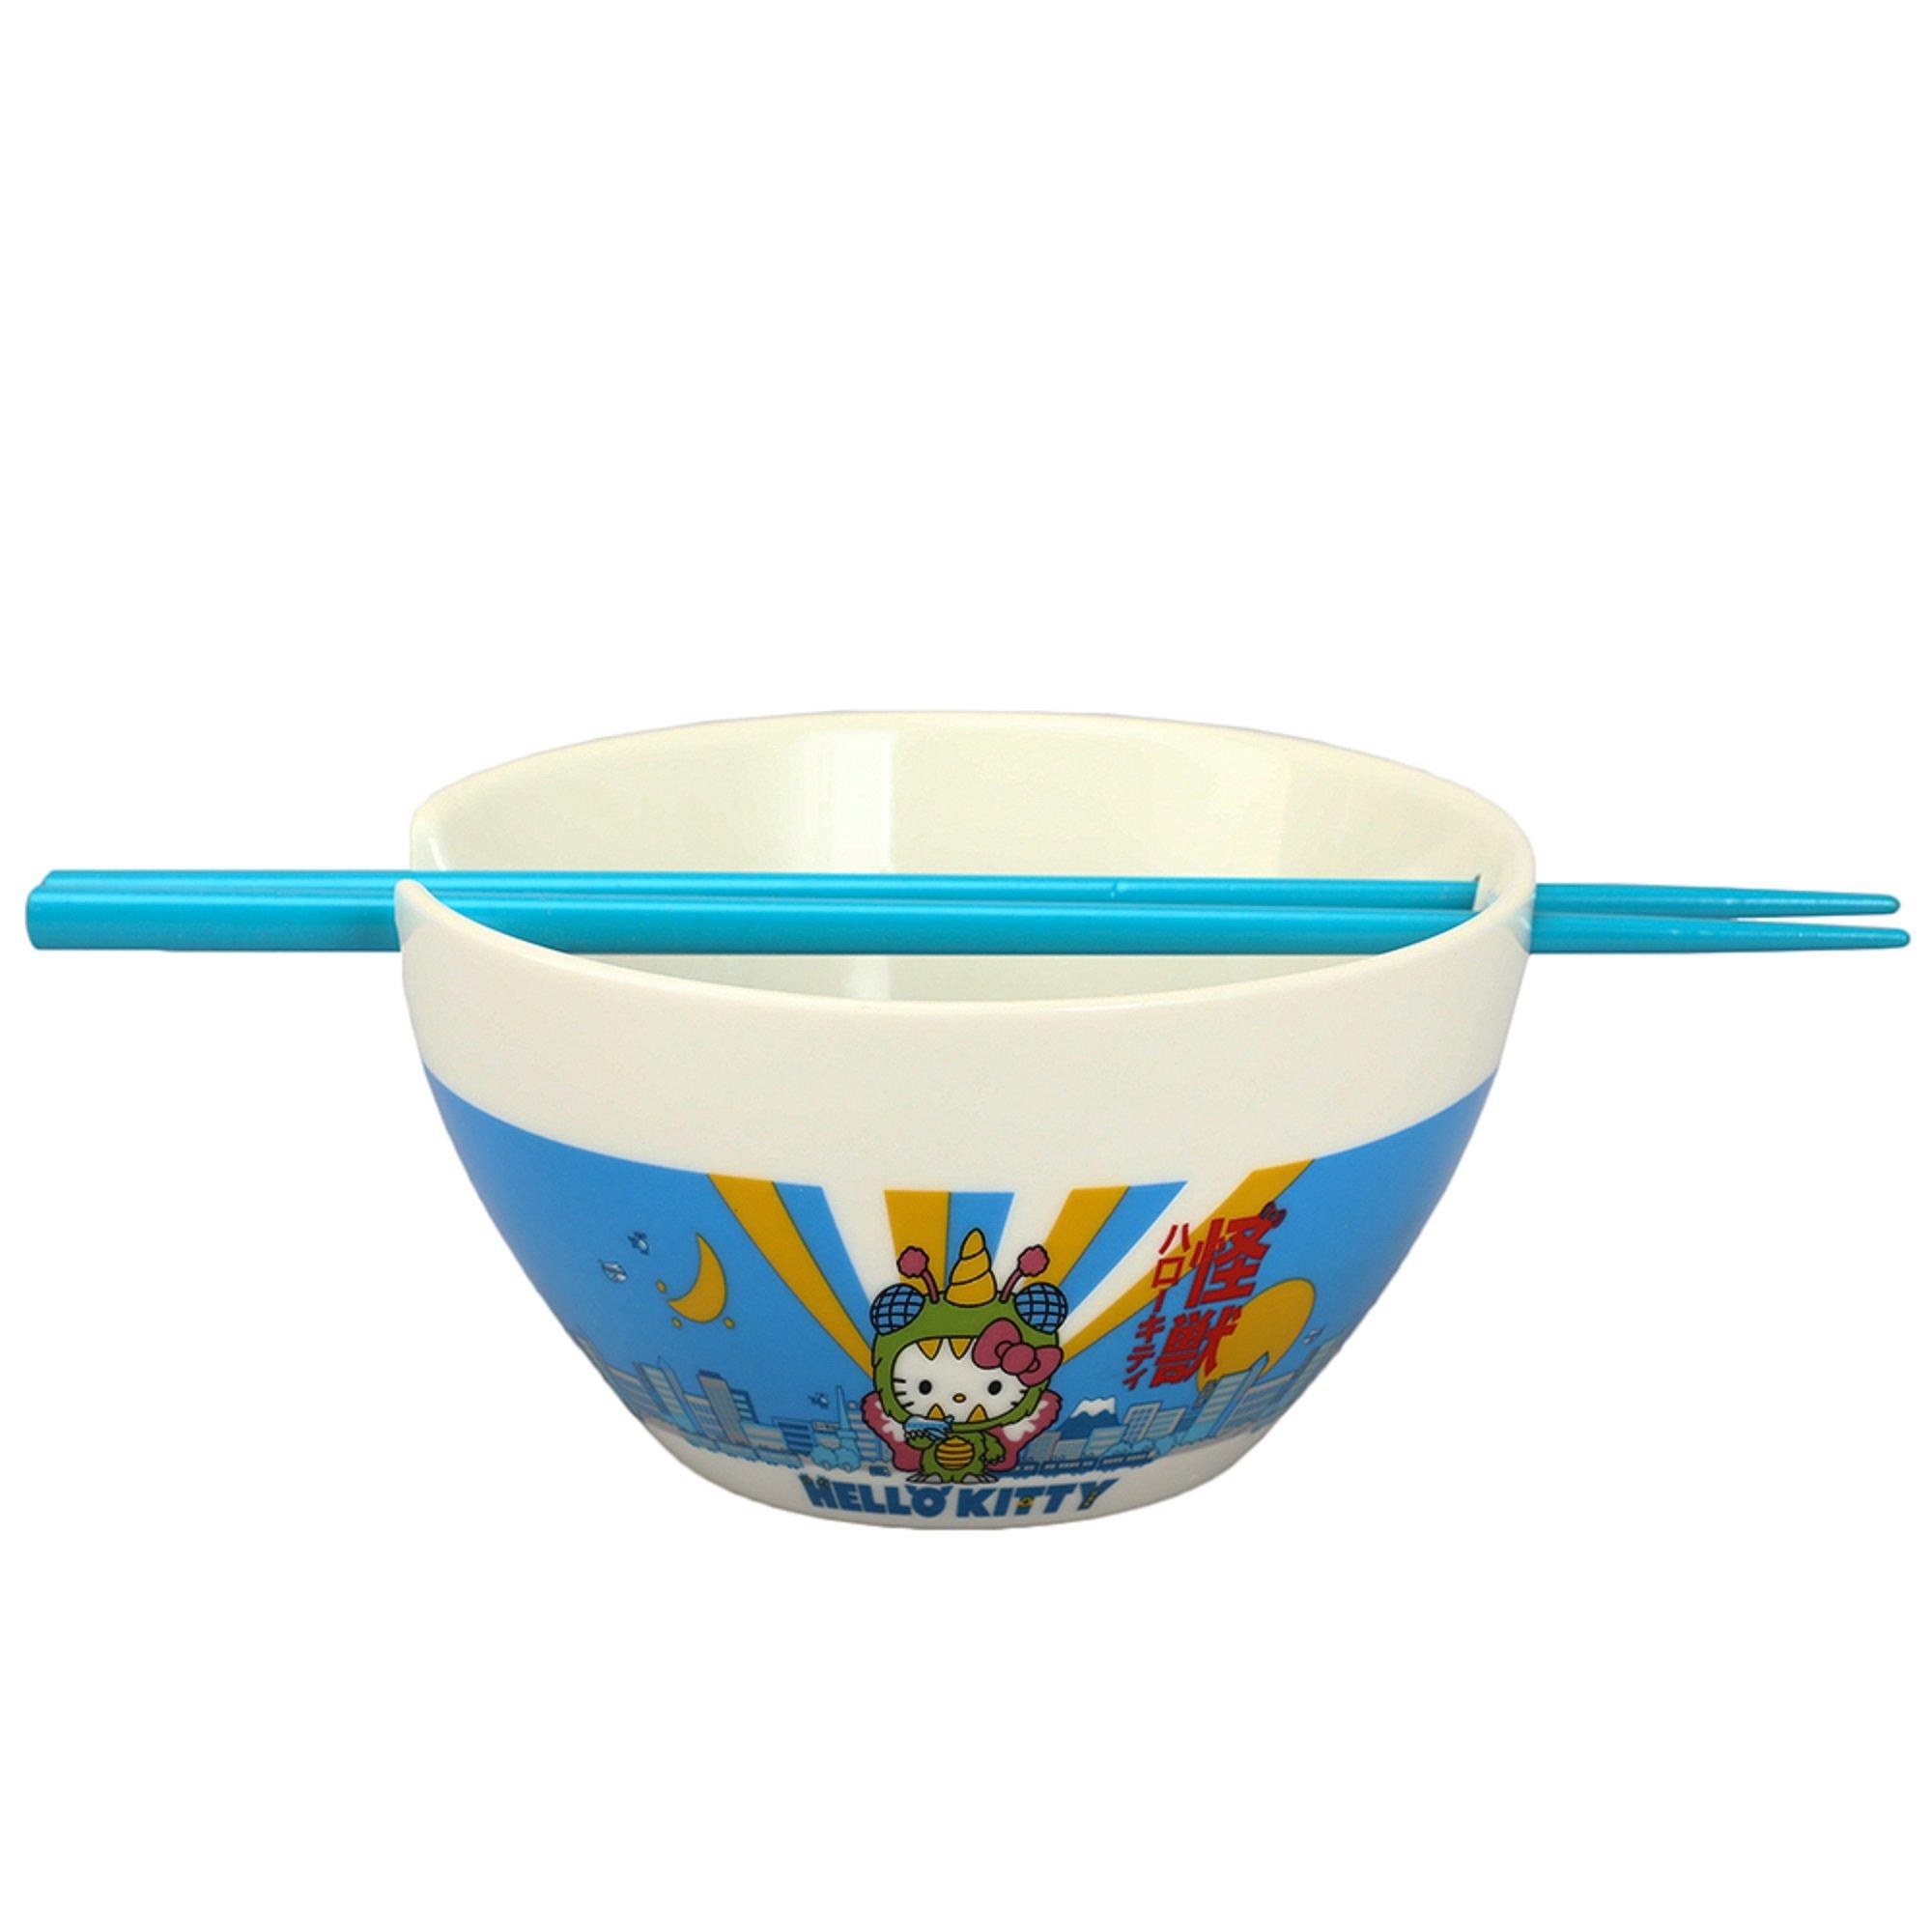 Hello Kitty Kaiju Cityscape Ceramic 20 Ooz Ramen Bowl with Chopsticks